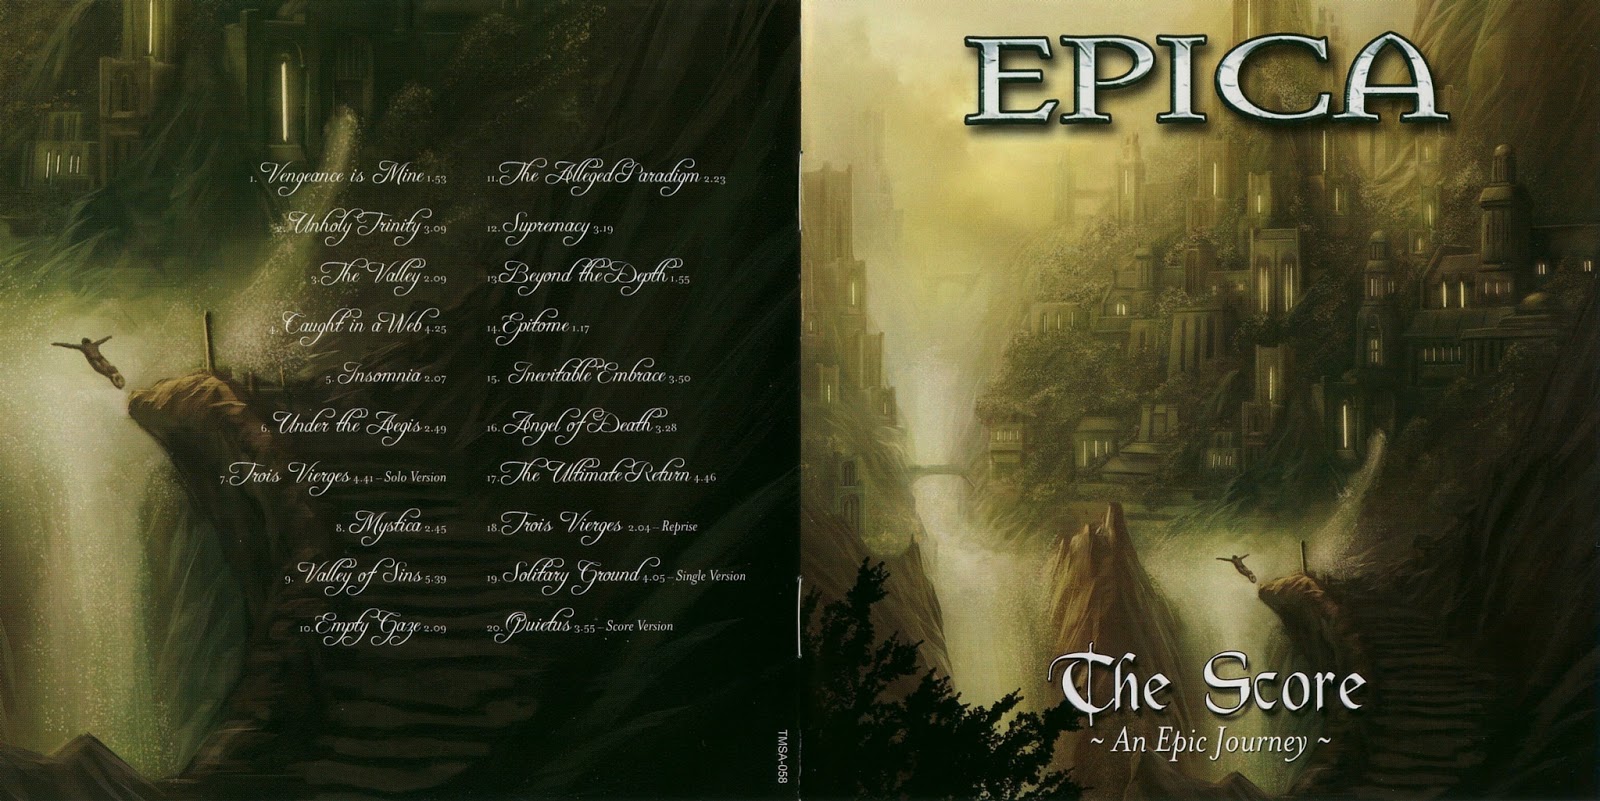 Epic journey. Epica the score an Epic Journey. Epica альбом the score — an Epic Journey. Epica 2005 consign to Oblivion. Epica - the score 2.0 (an Epic Journey).